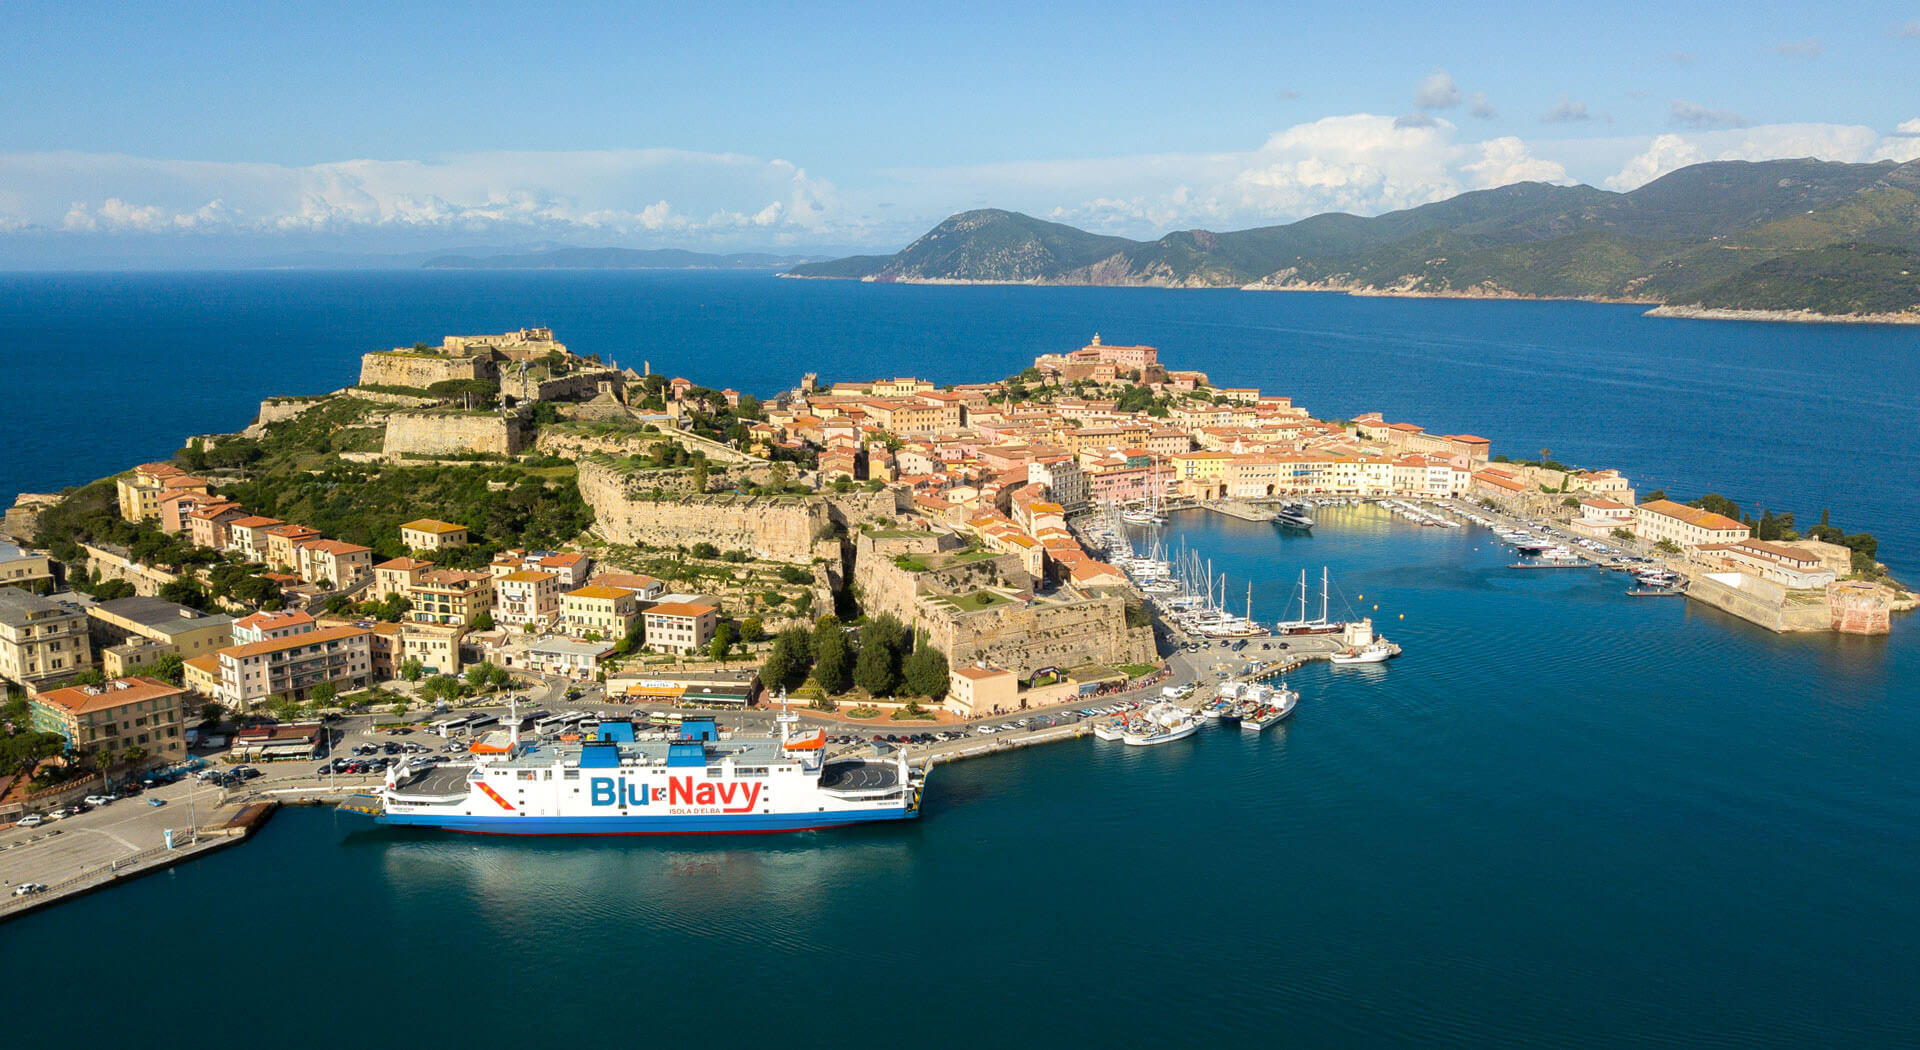 traghetto Blu Navy per Isola Elba